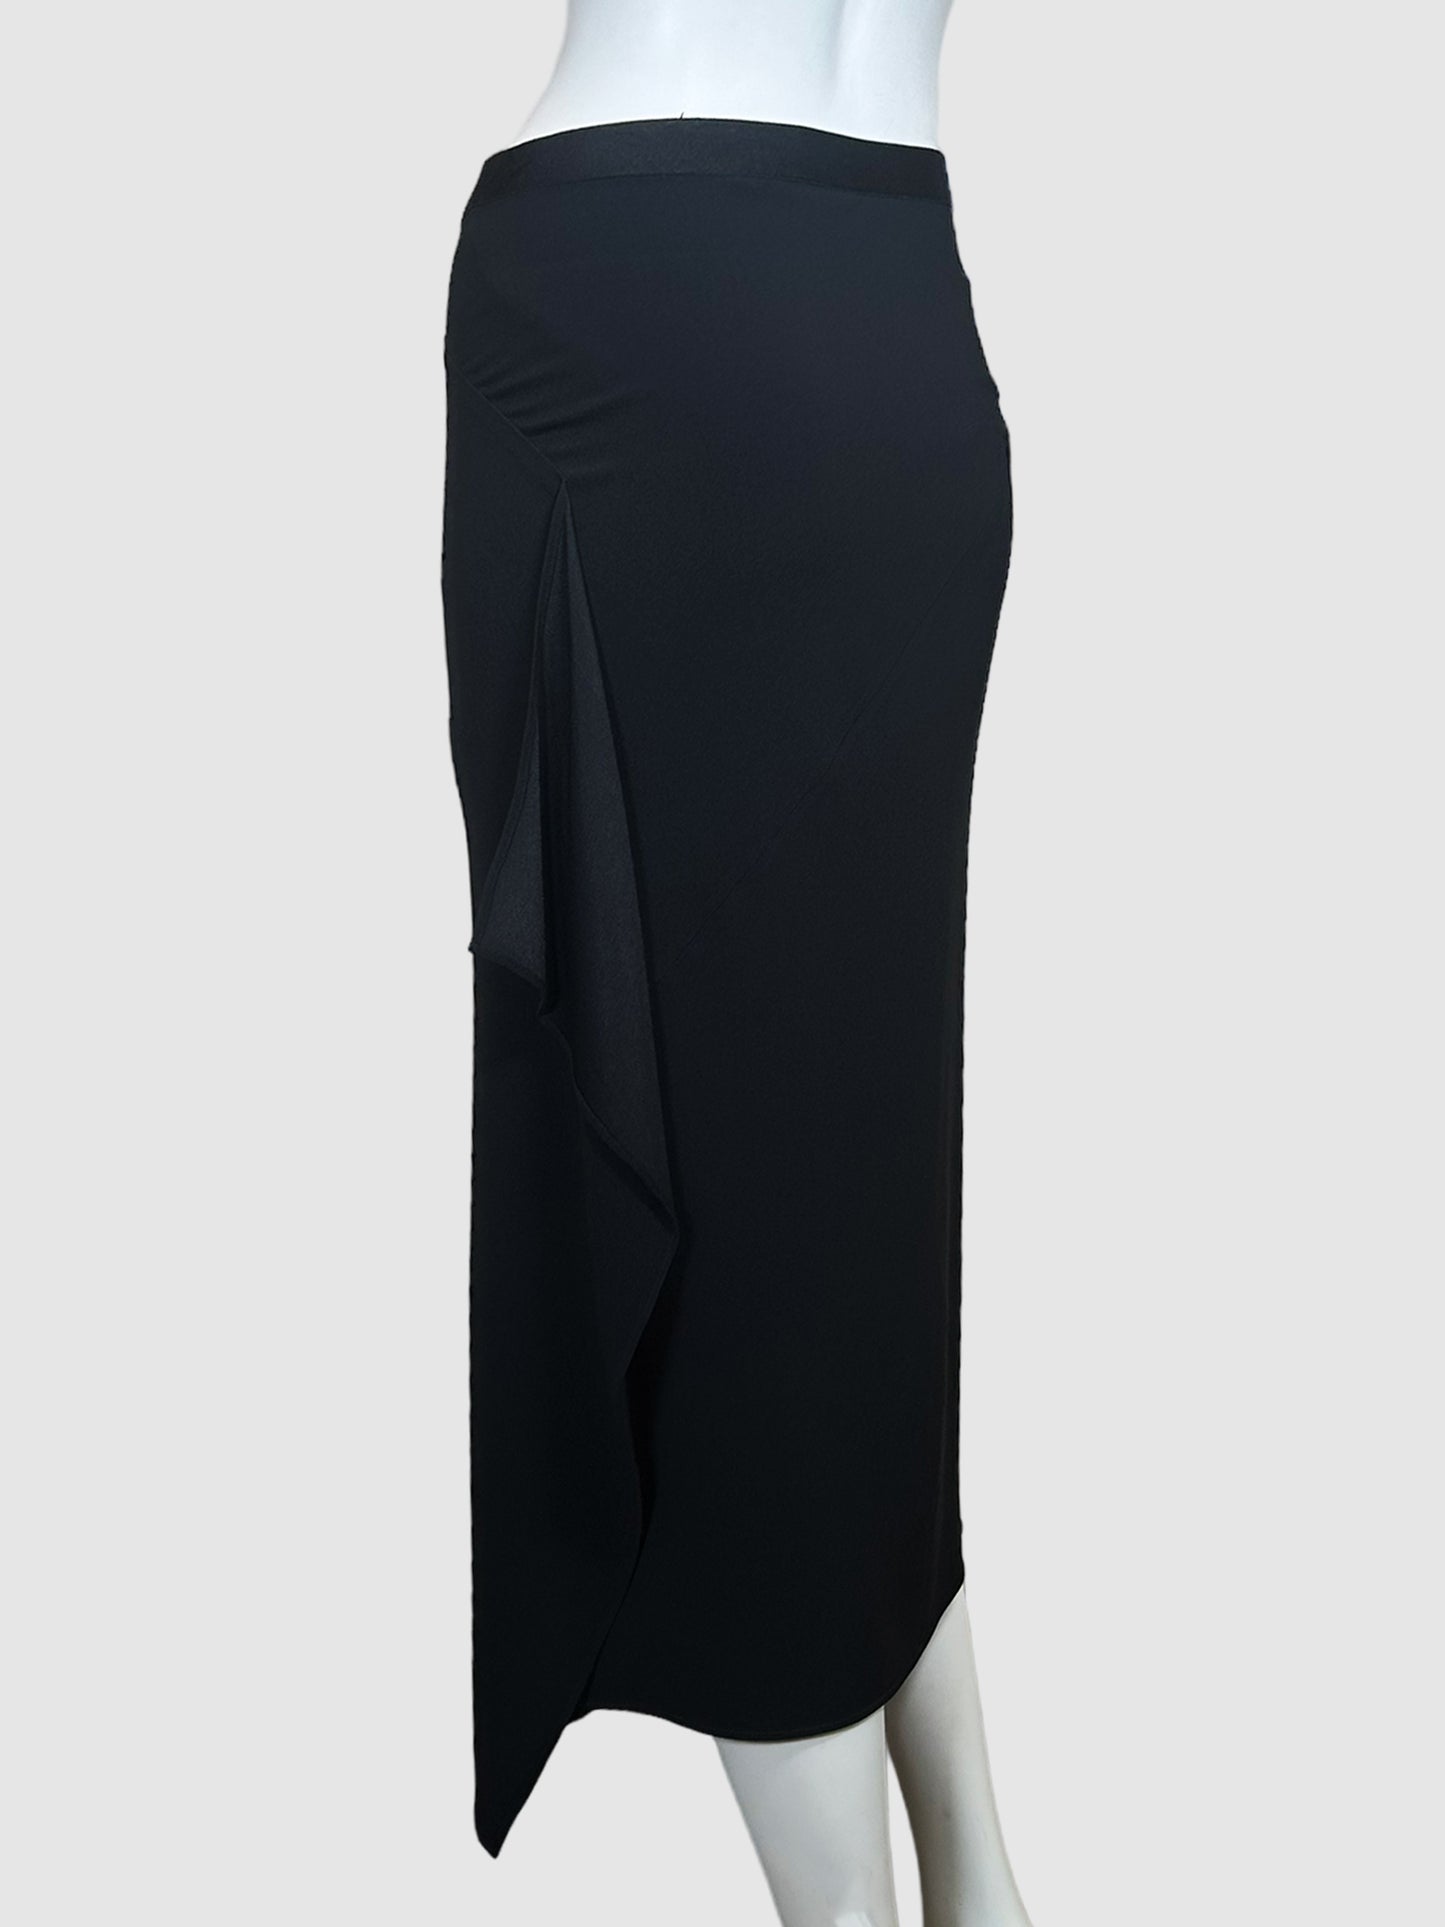 Helmut Lang Midi Skirt - Size XS